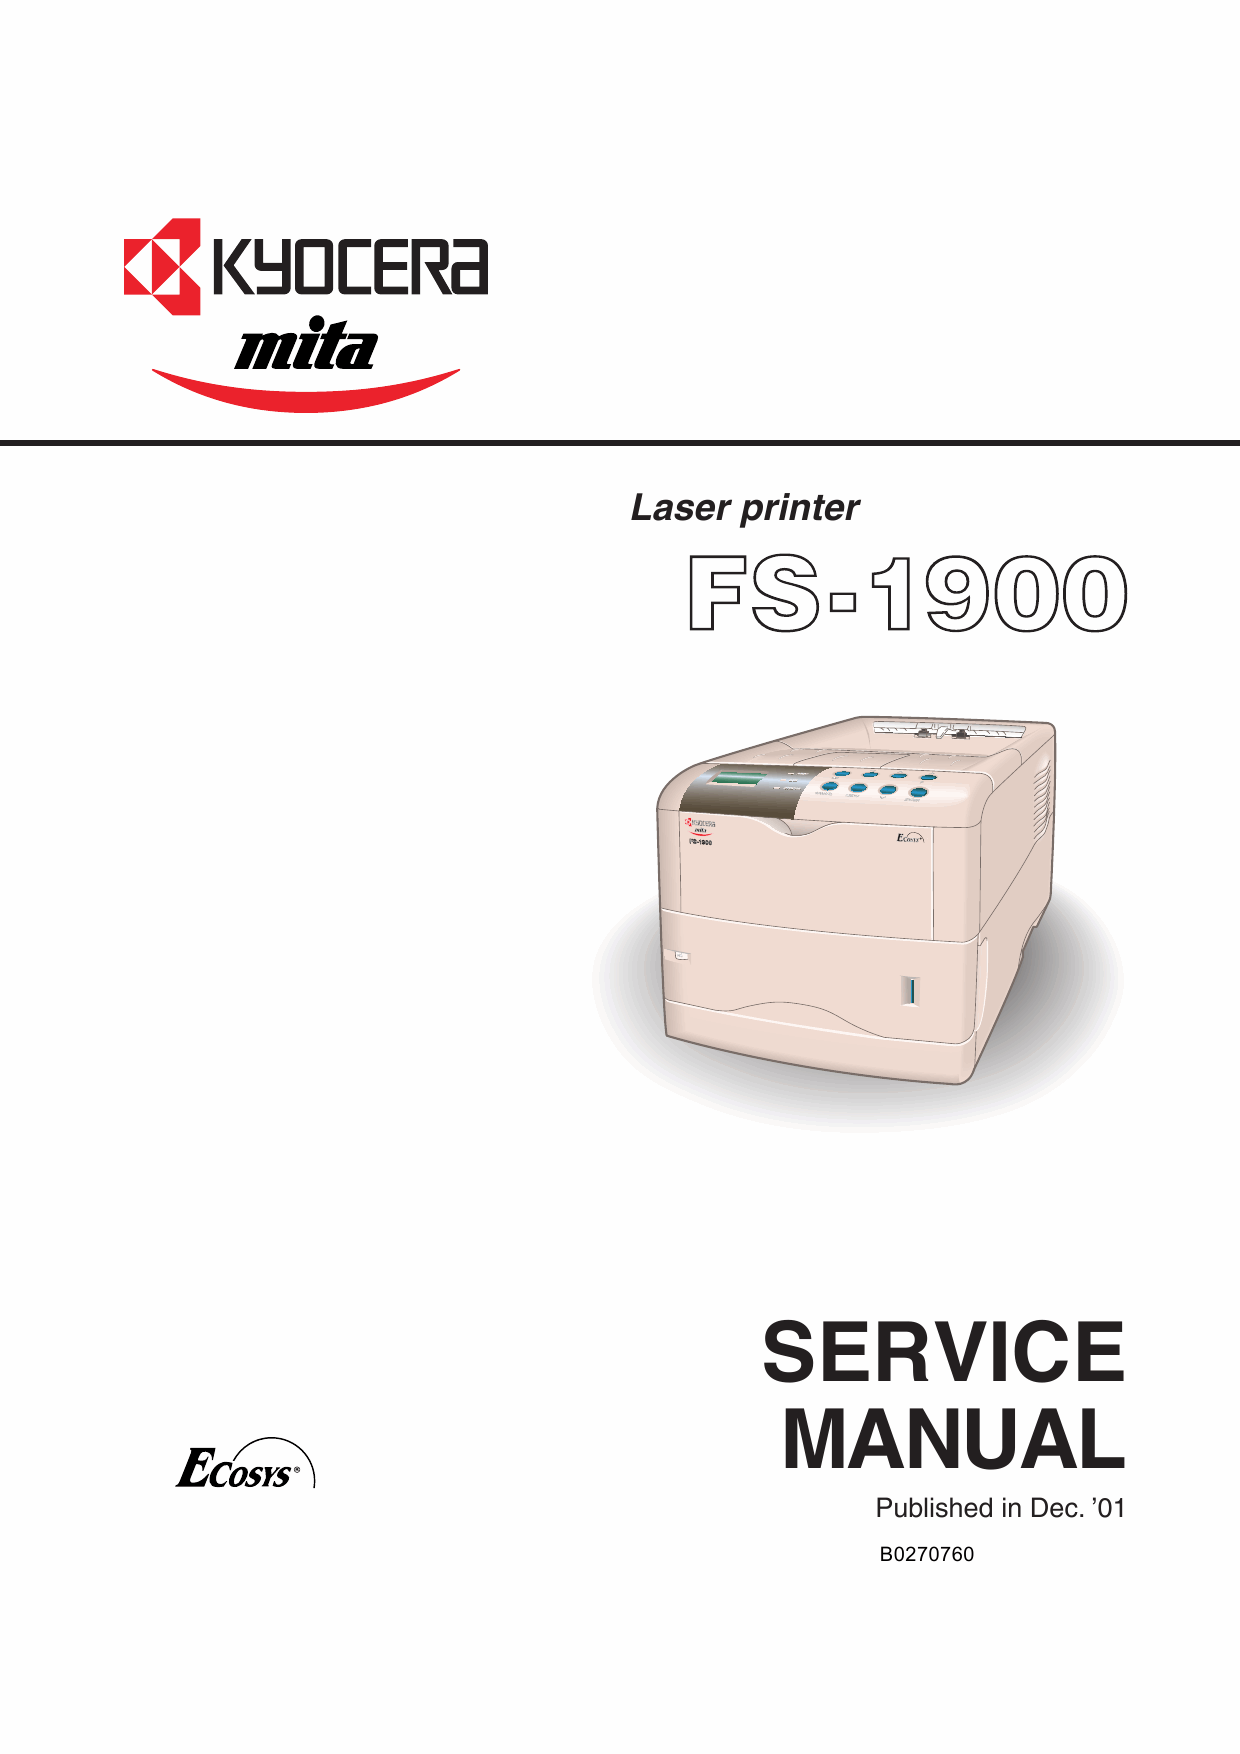 Kyocera service manual. Kyocera FS 1800. Термопринтер service manual. Мануал ФС. Принтер Kyocera 1800 инструкция.